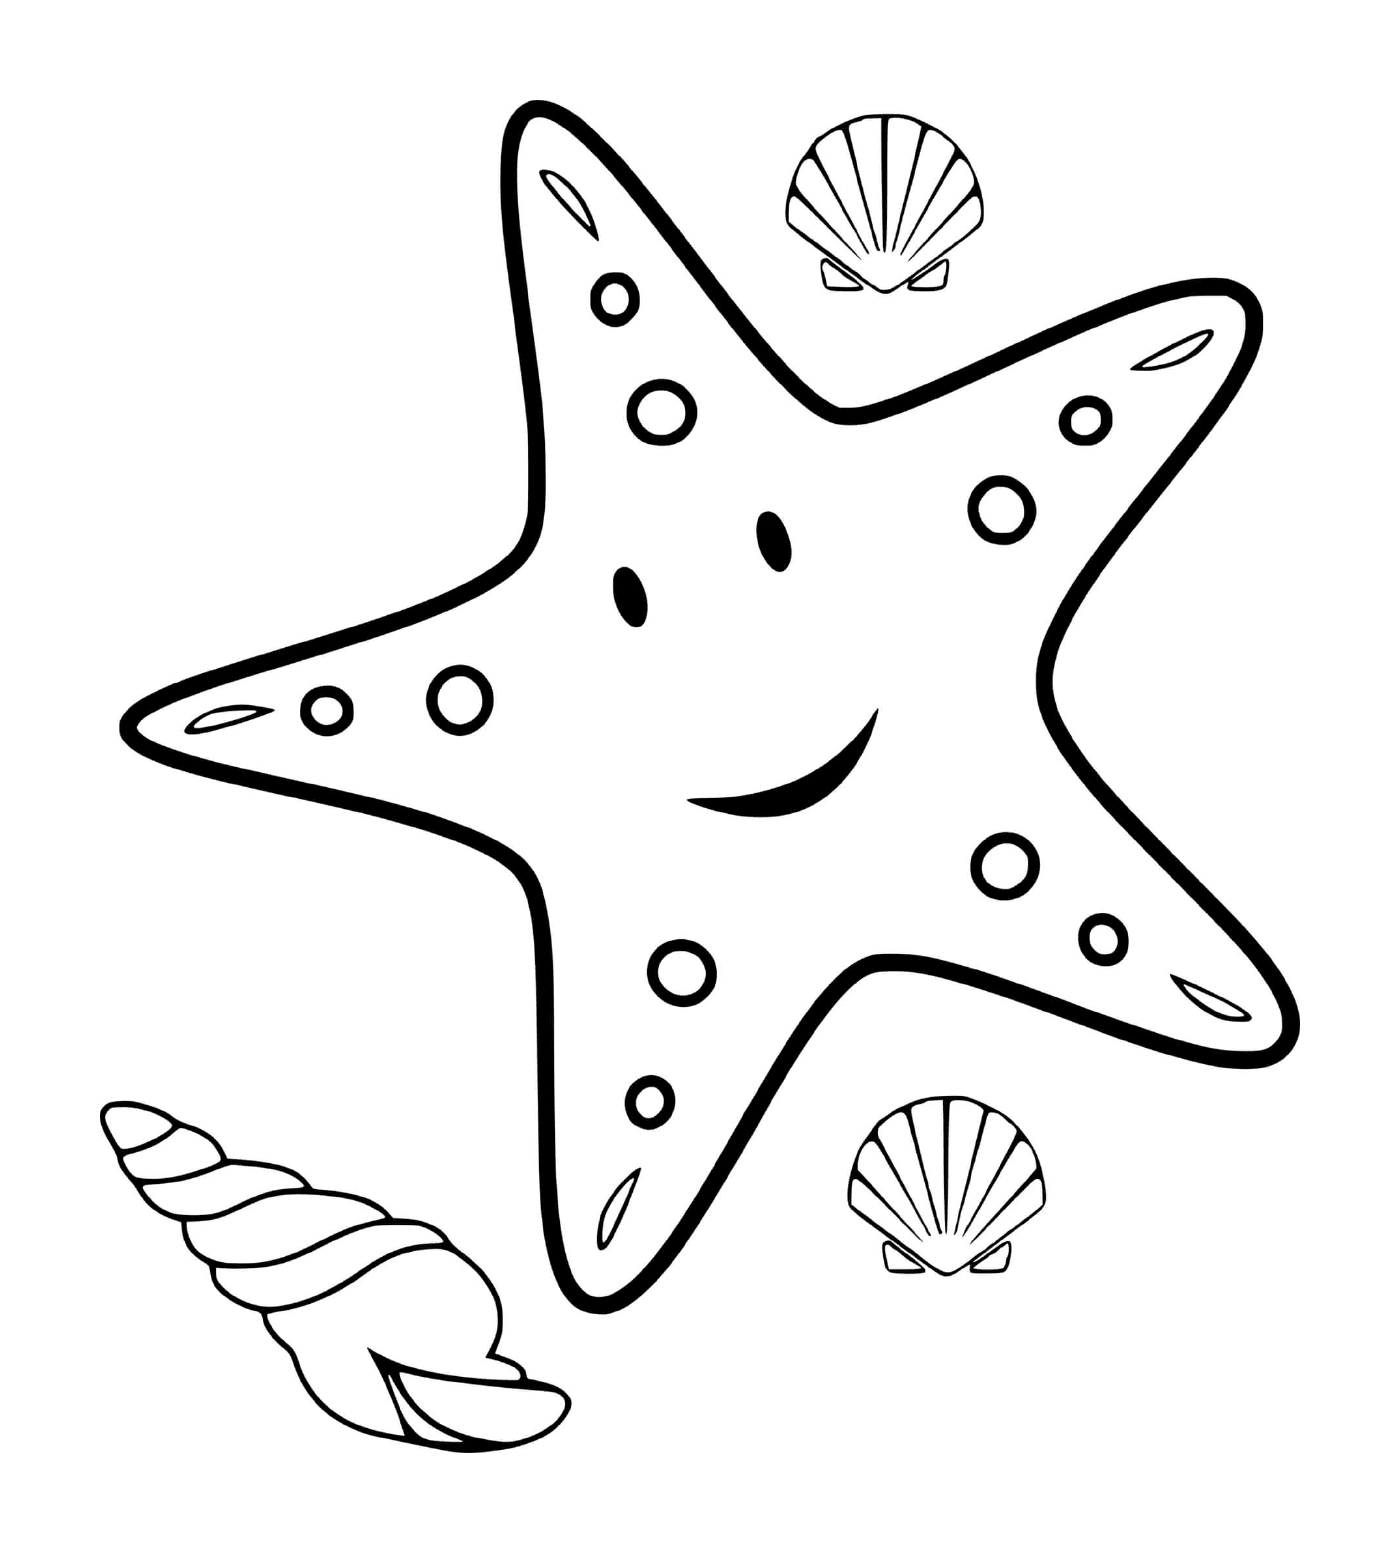  Estrela do mar na água 